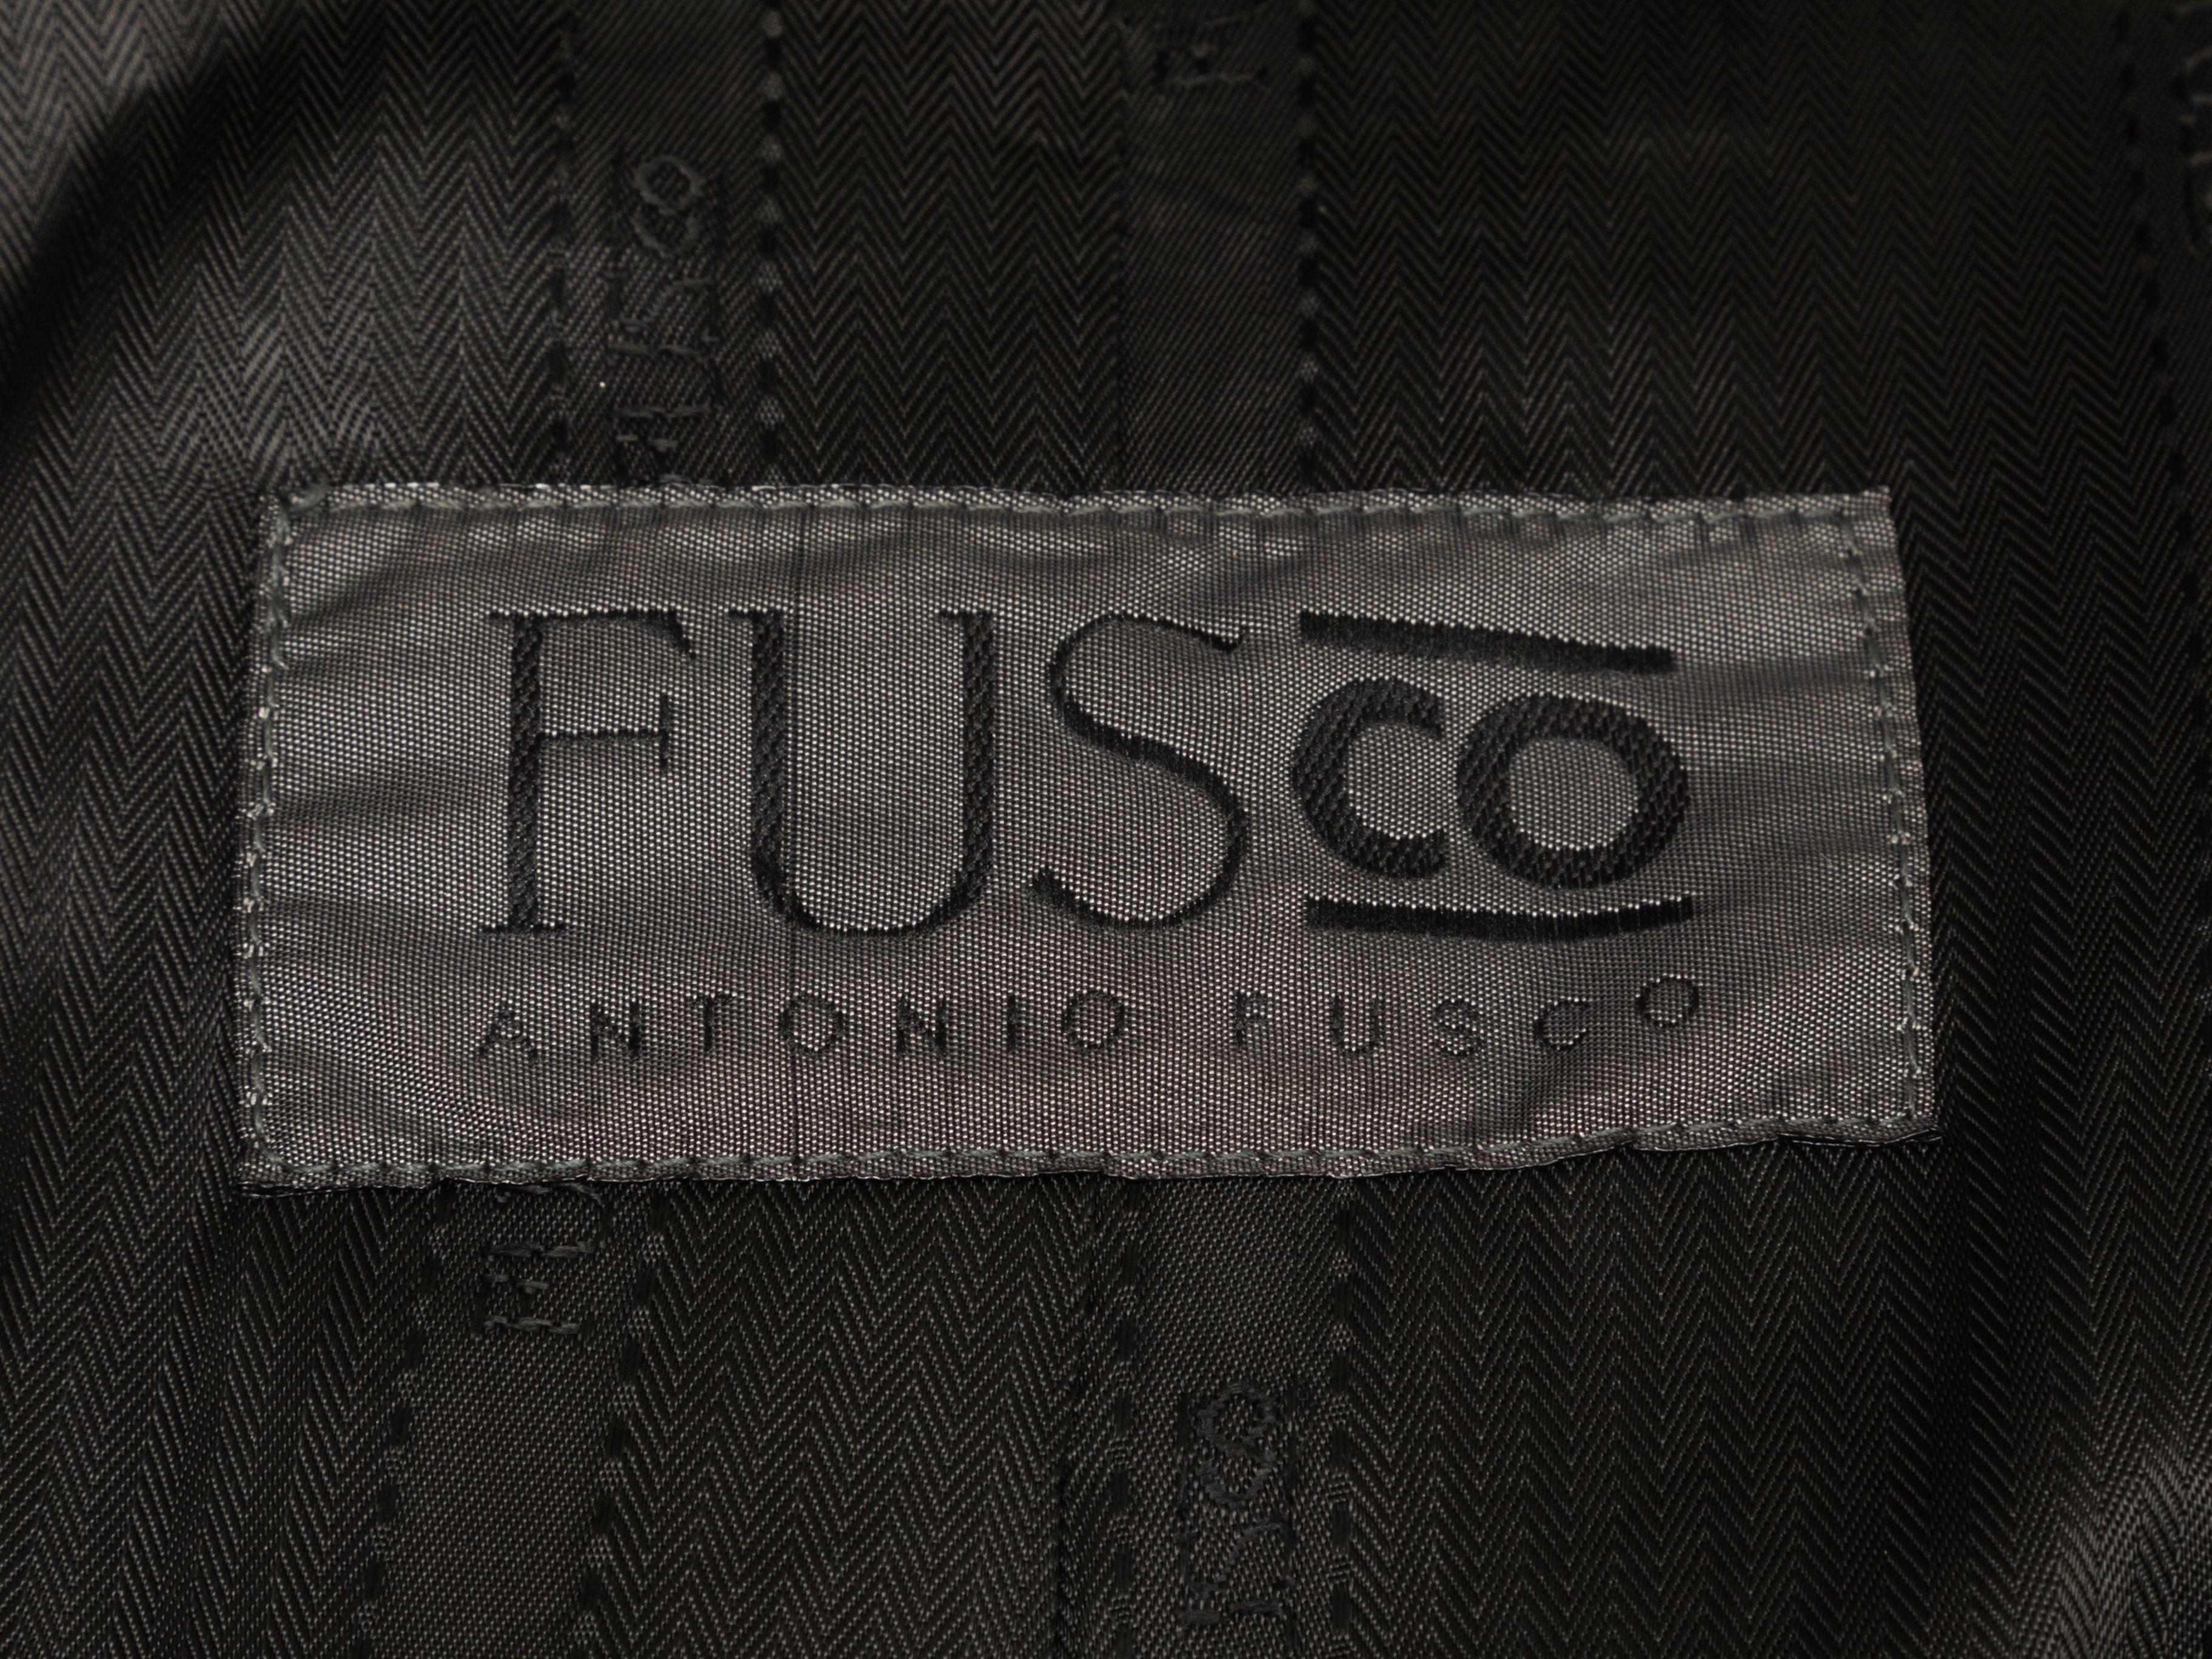 Product Details: Black long faux Persian lamb fur coat by Antonio Fusco. Notched lapel. Sash tie at waist. Button closures at center front. 38